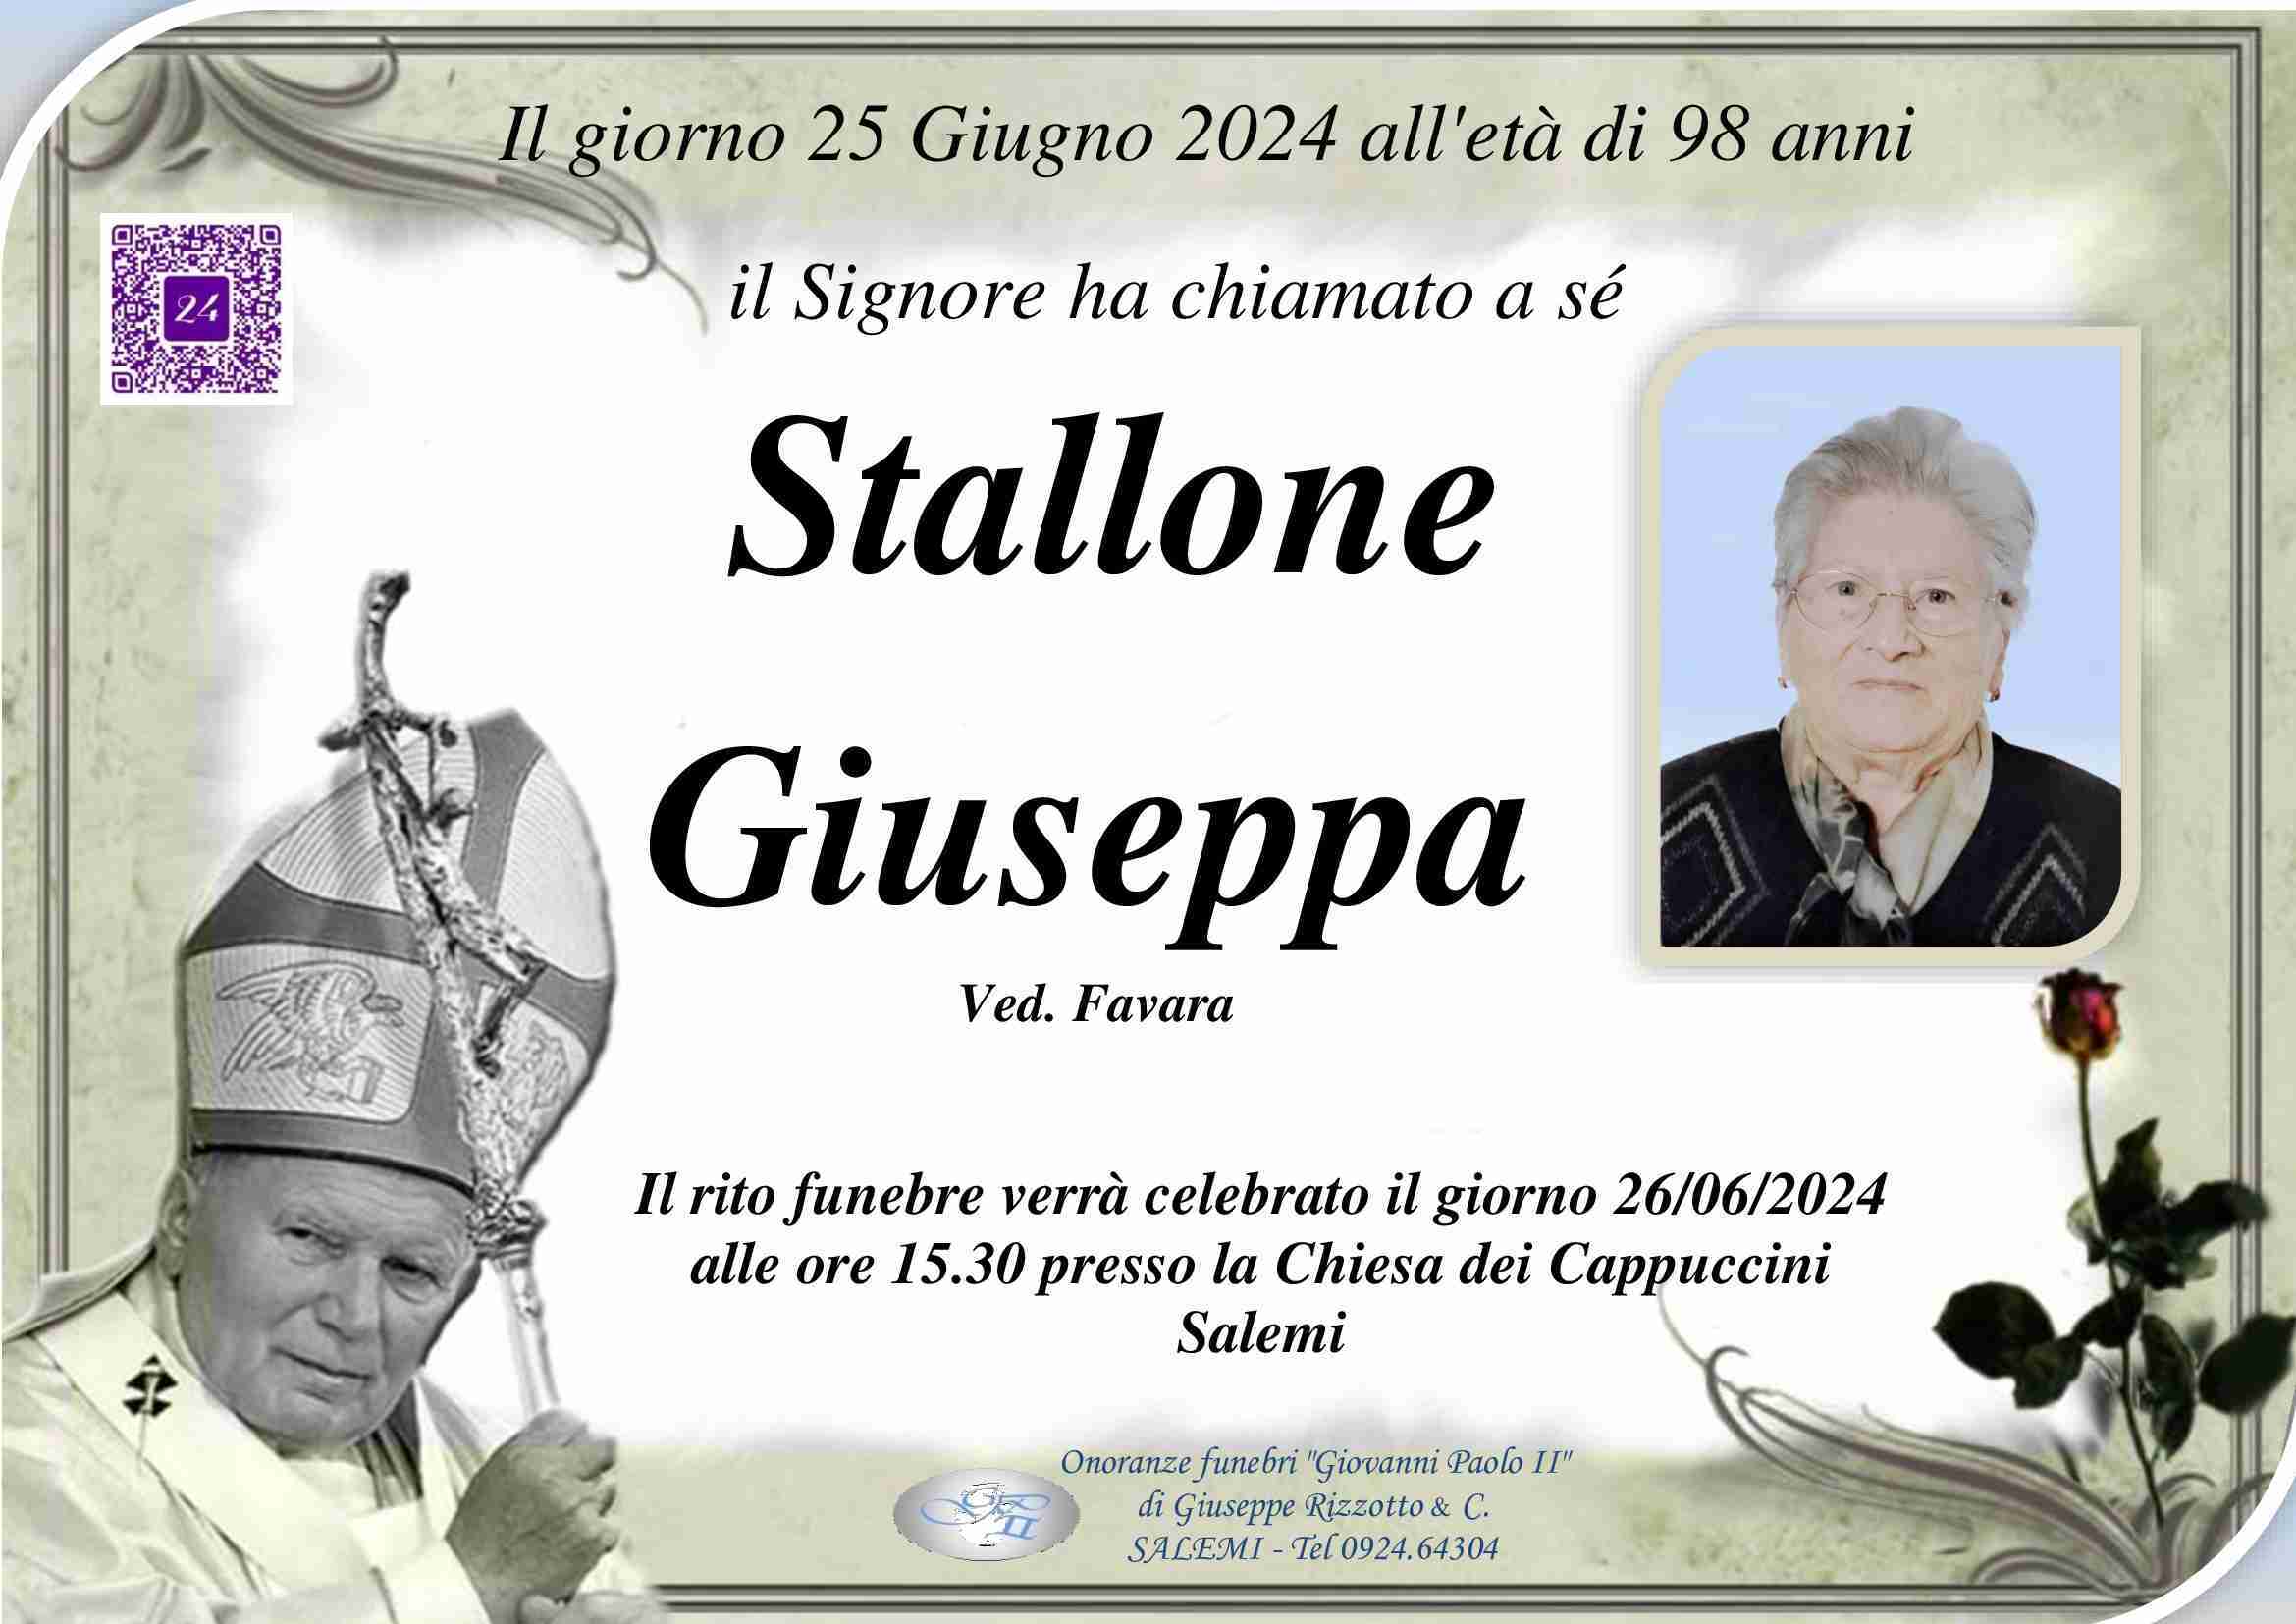 Giuseppa Stallone